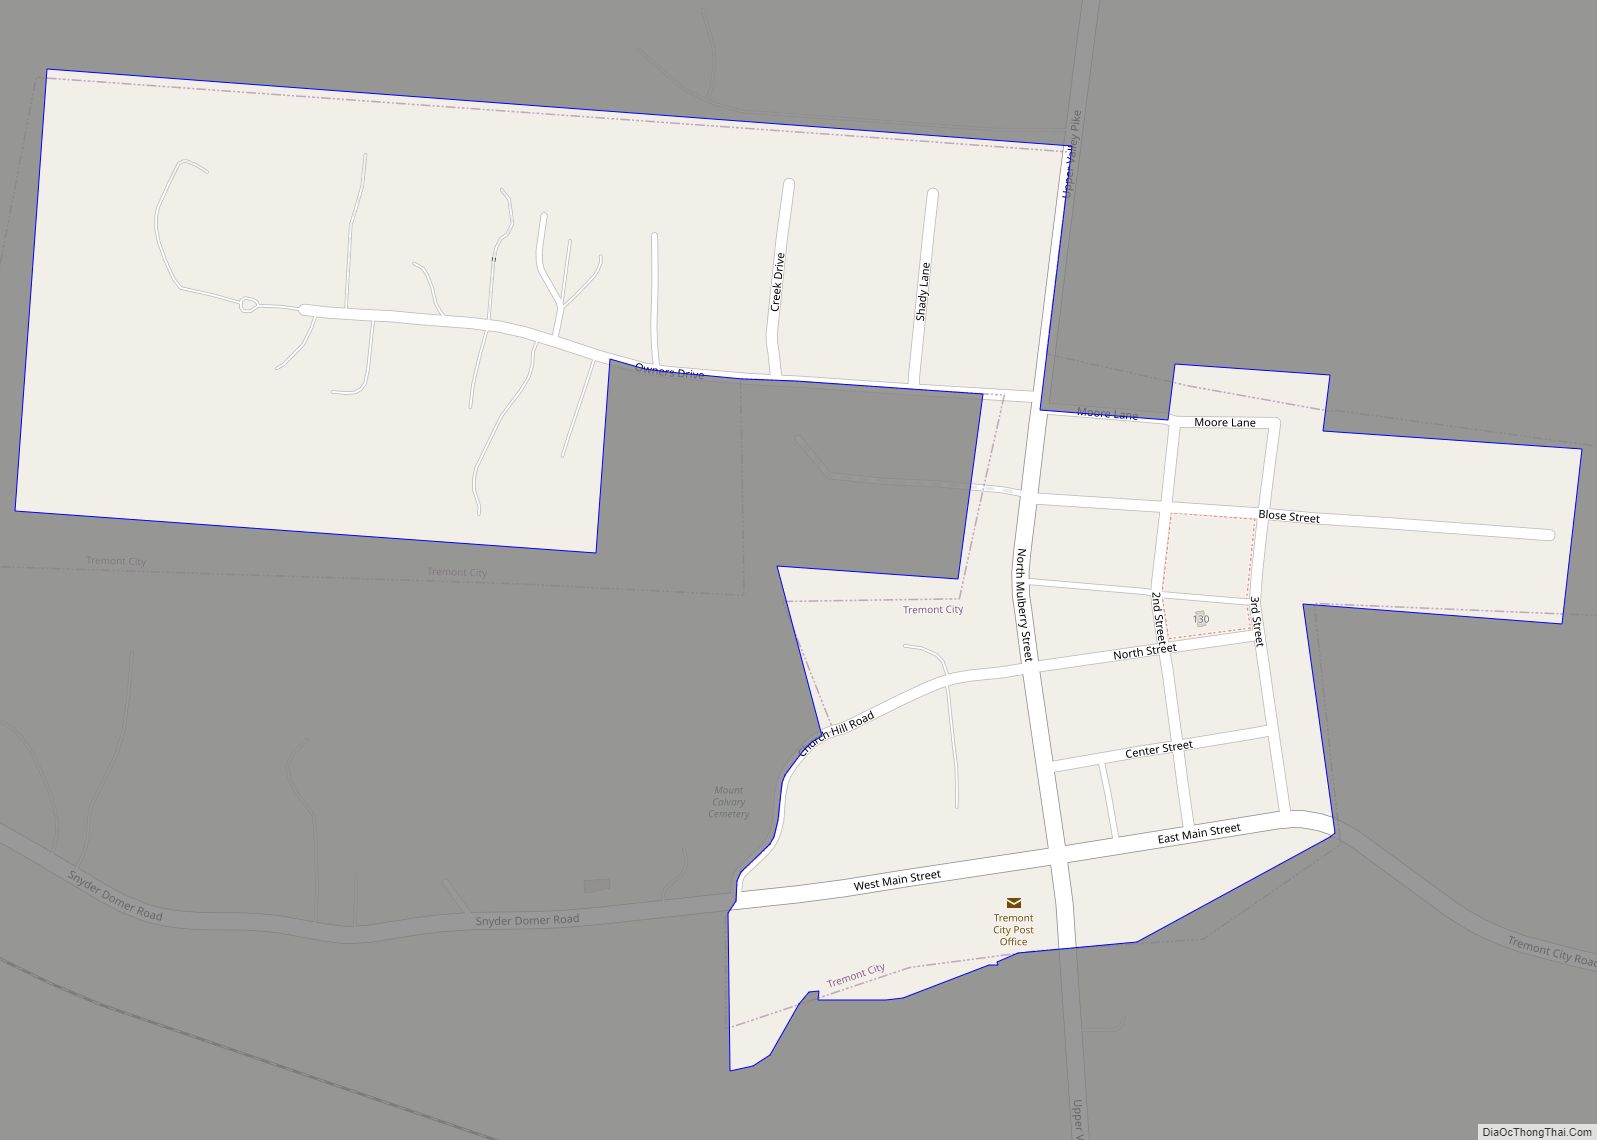 Map of Tremont City village